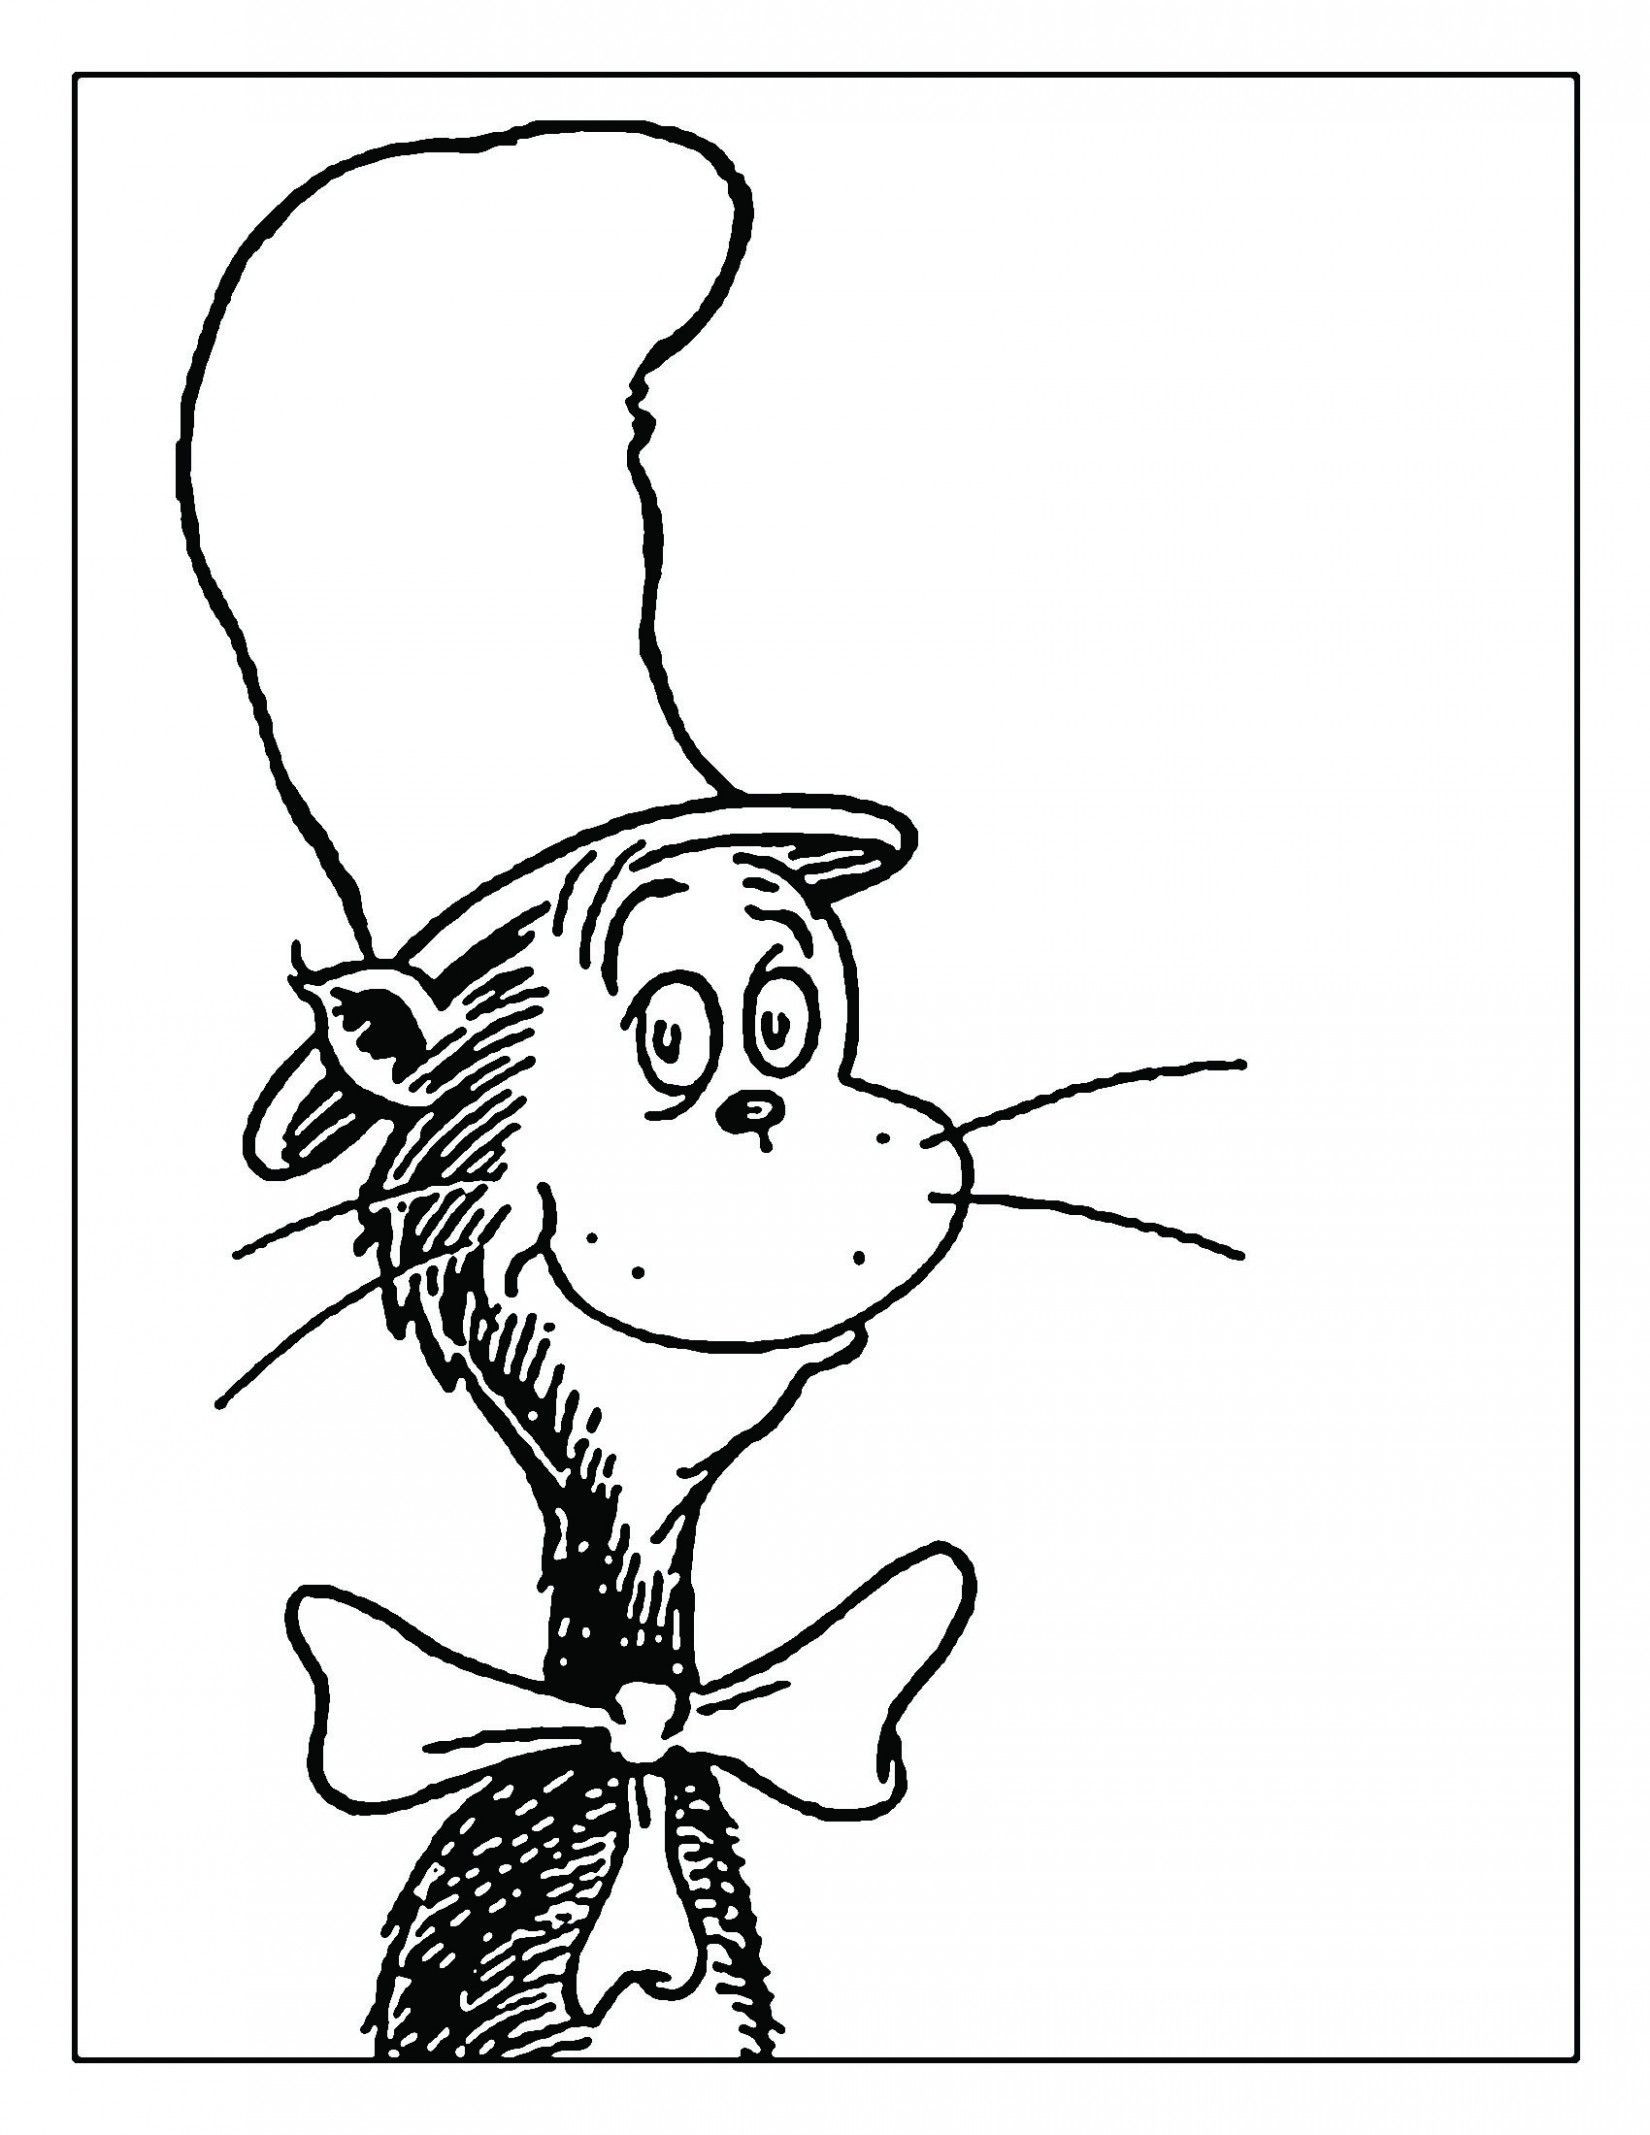 Dr. Seuss Preschool Coloring Sheets
 Dr Seuss Cat in the Hat